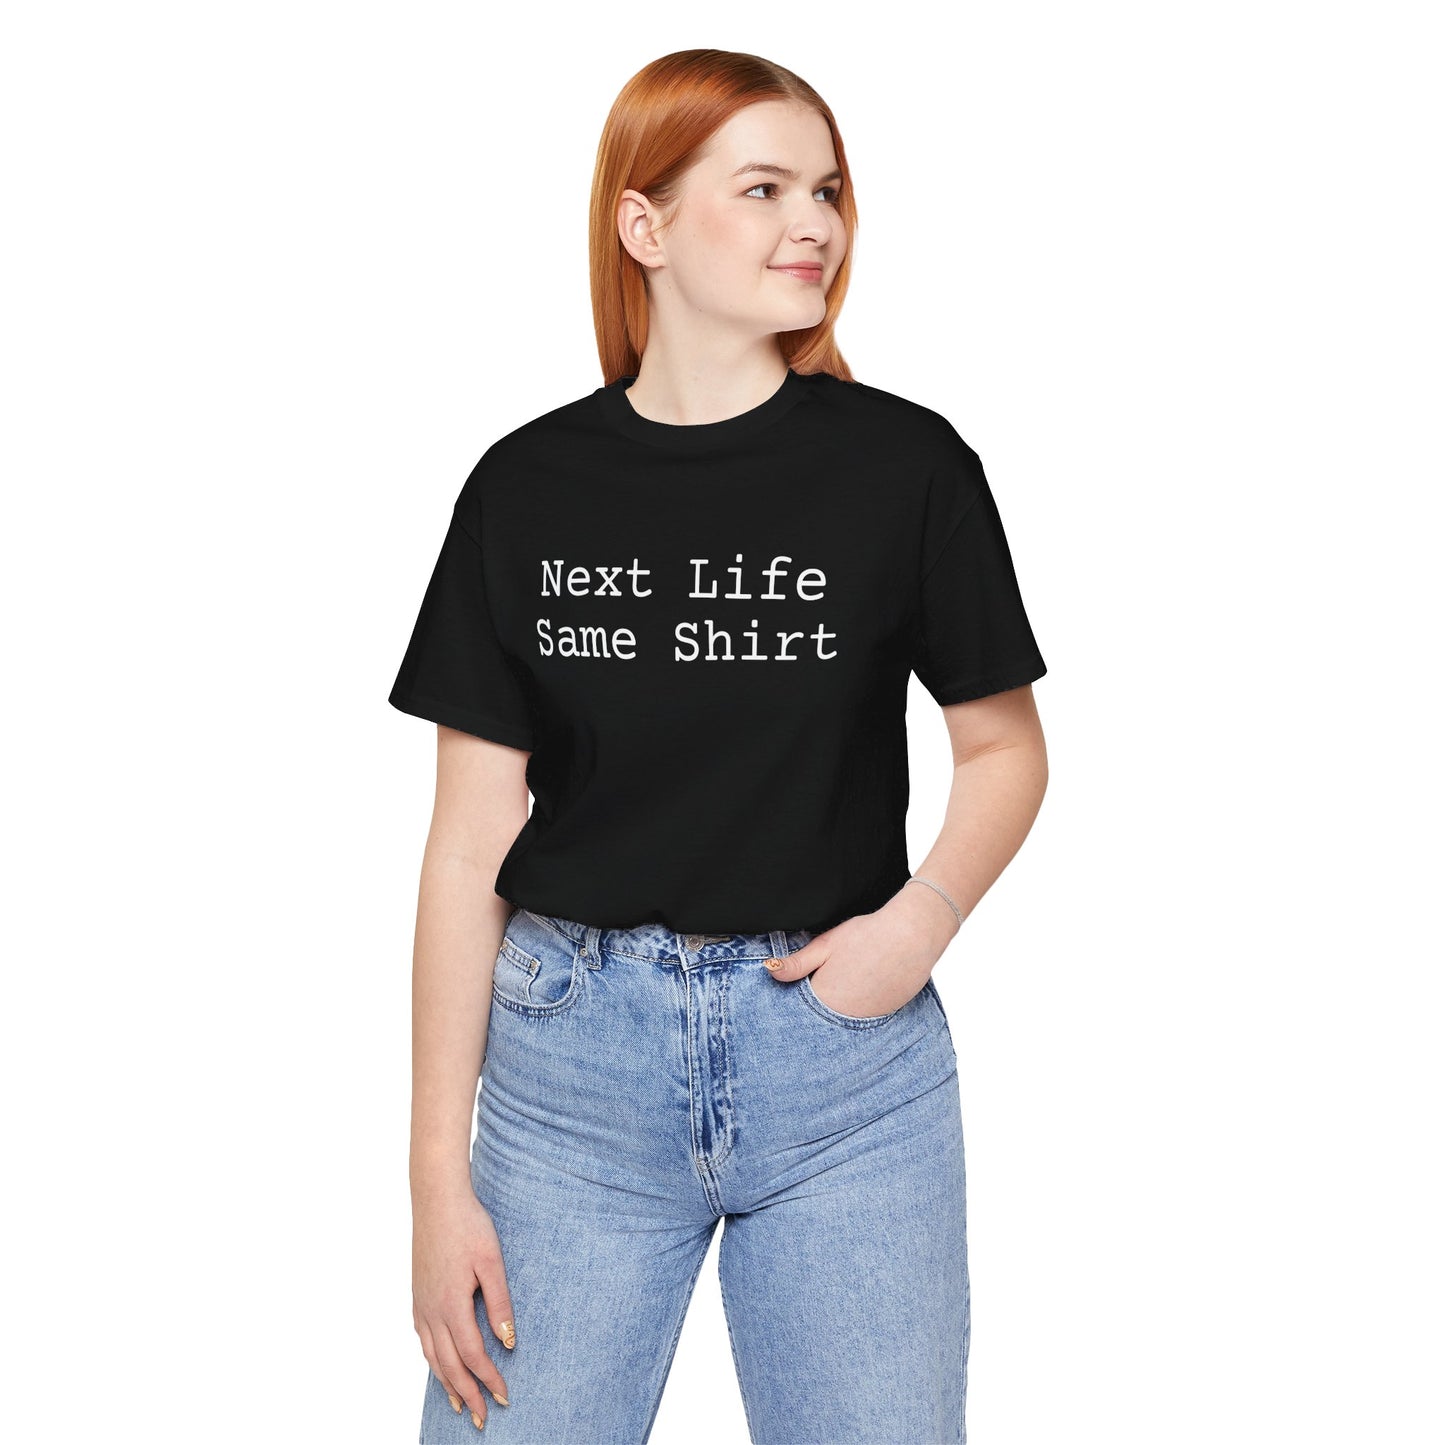 Next Life Same Shirt - Hurts Shirts Collection